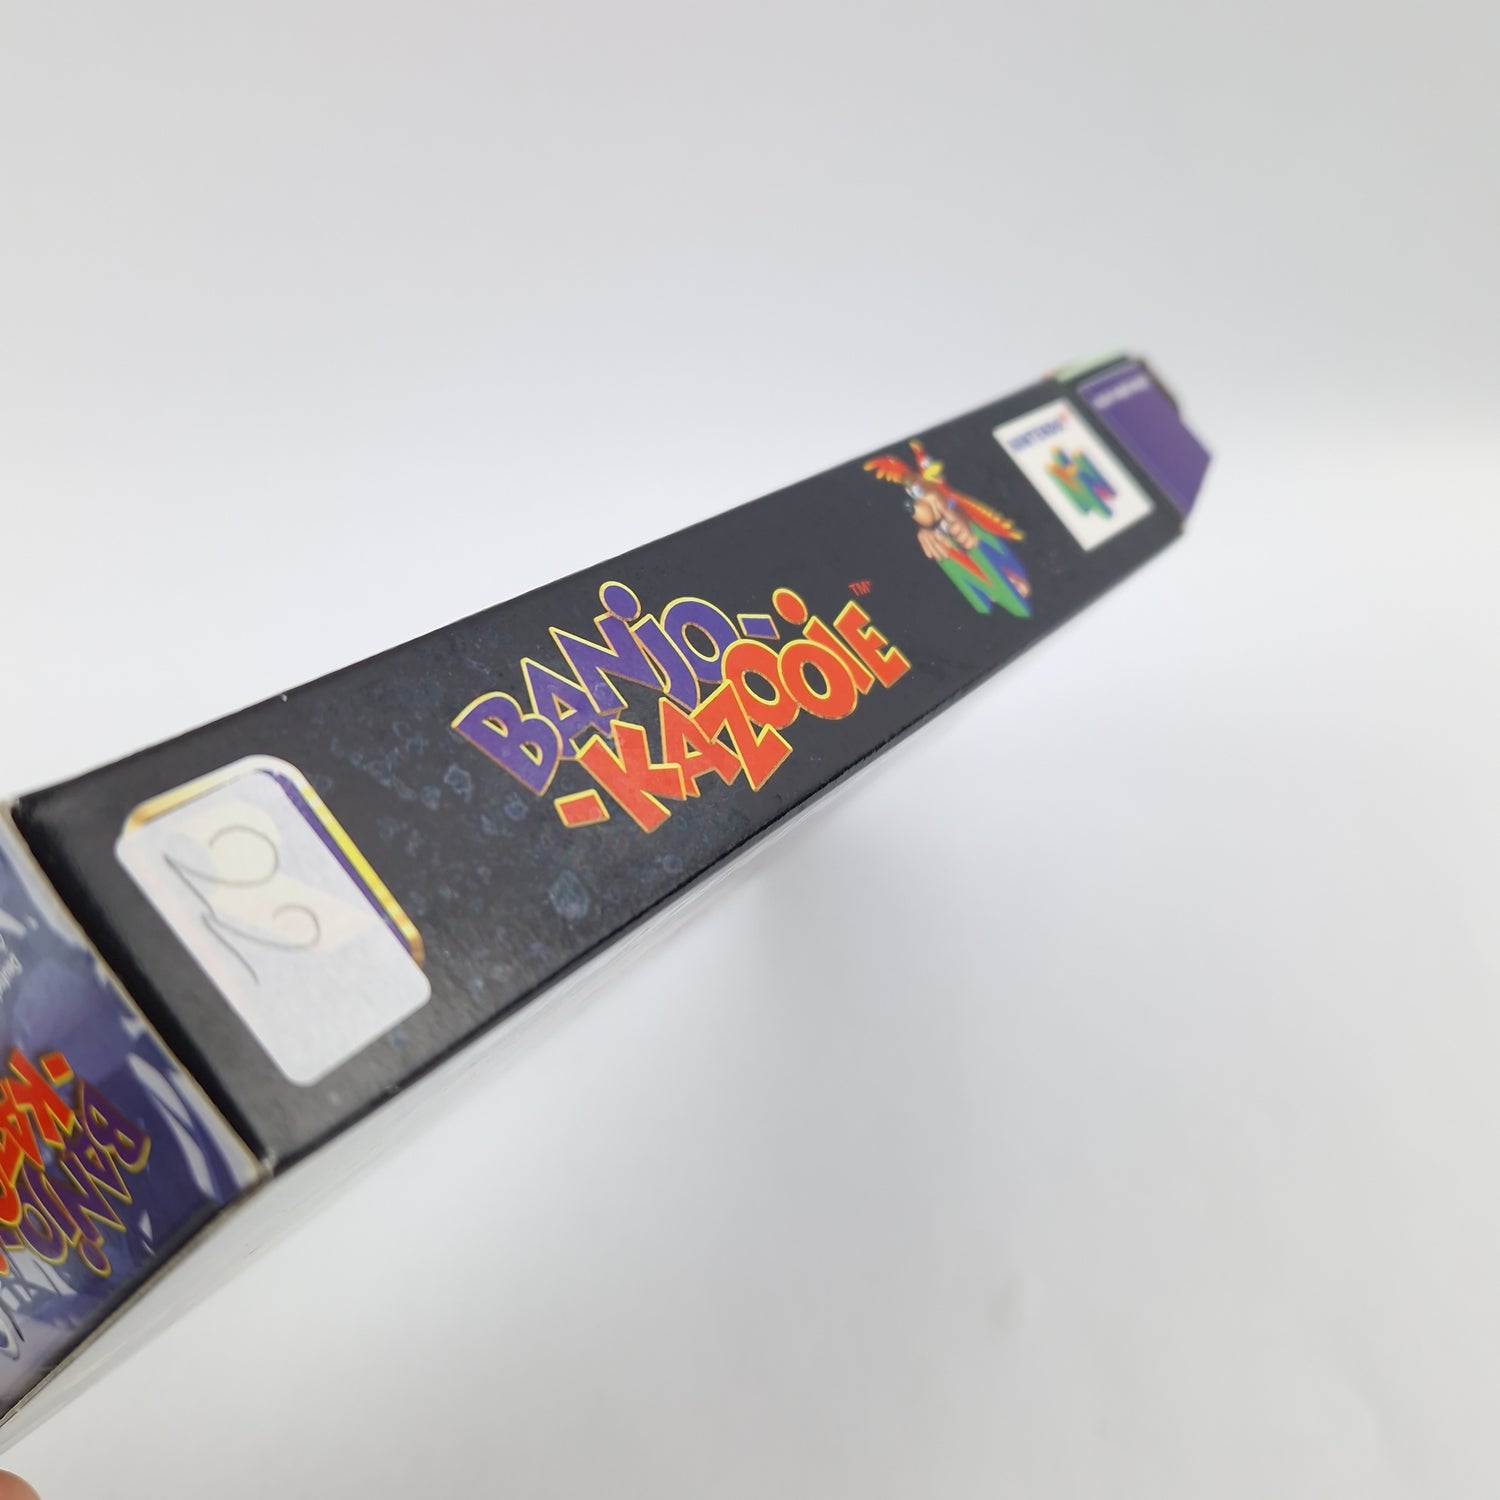 Nintendo 64 Game: Banjo Kazooie - Module Instructions OVP CIB / N64 PAL